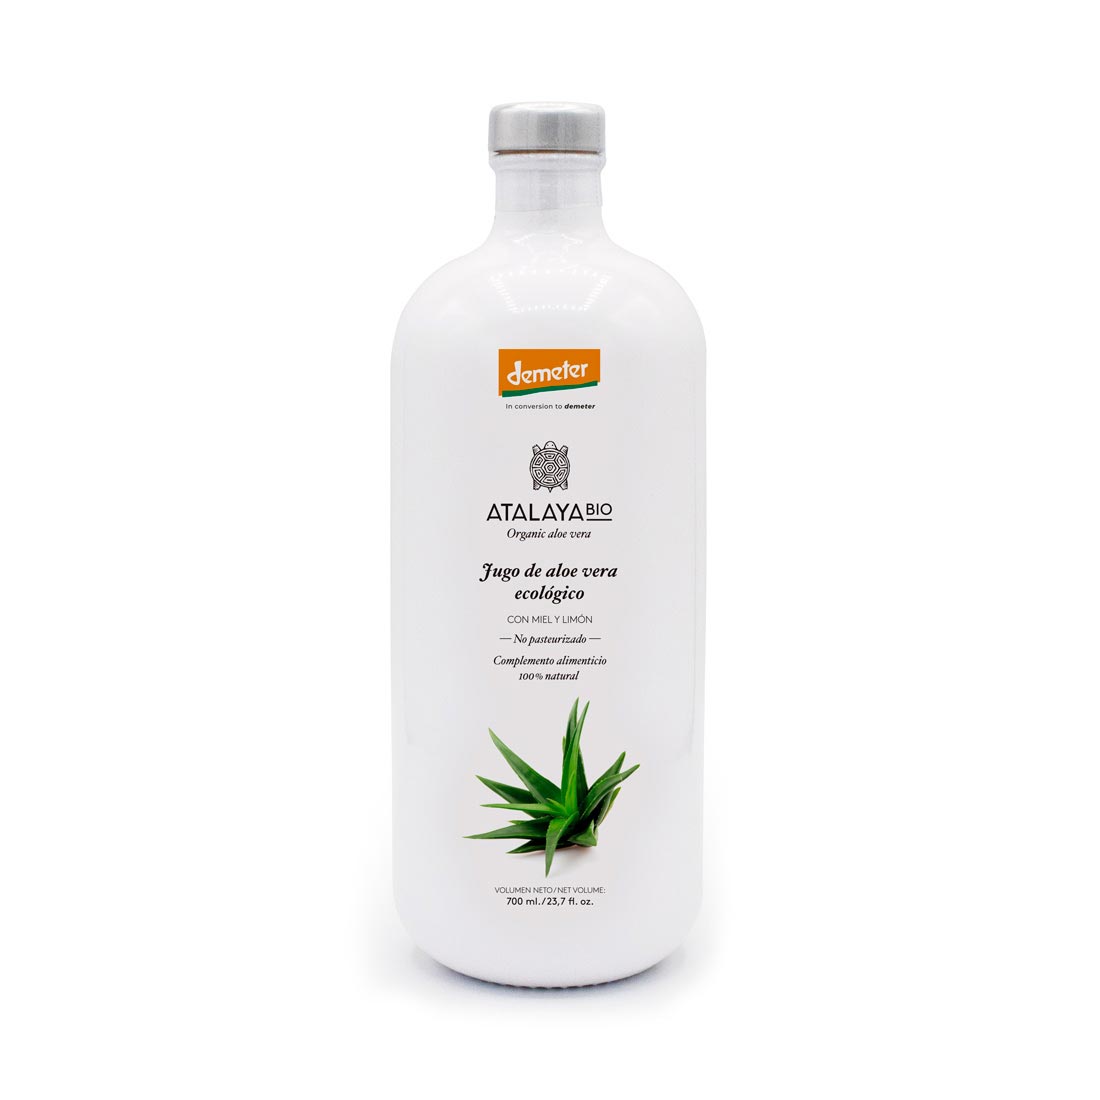 Biodynamic Pure Aloe Vera Juice (96%) with Honey and Lemon Aloin-Free